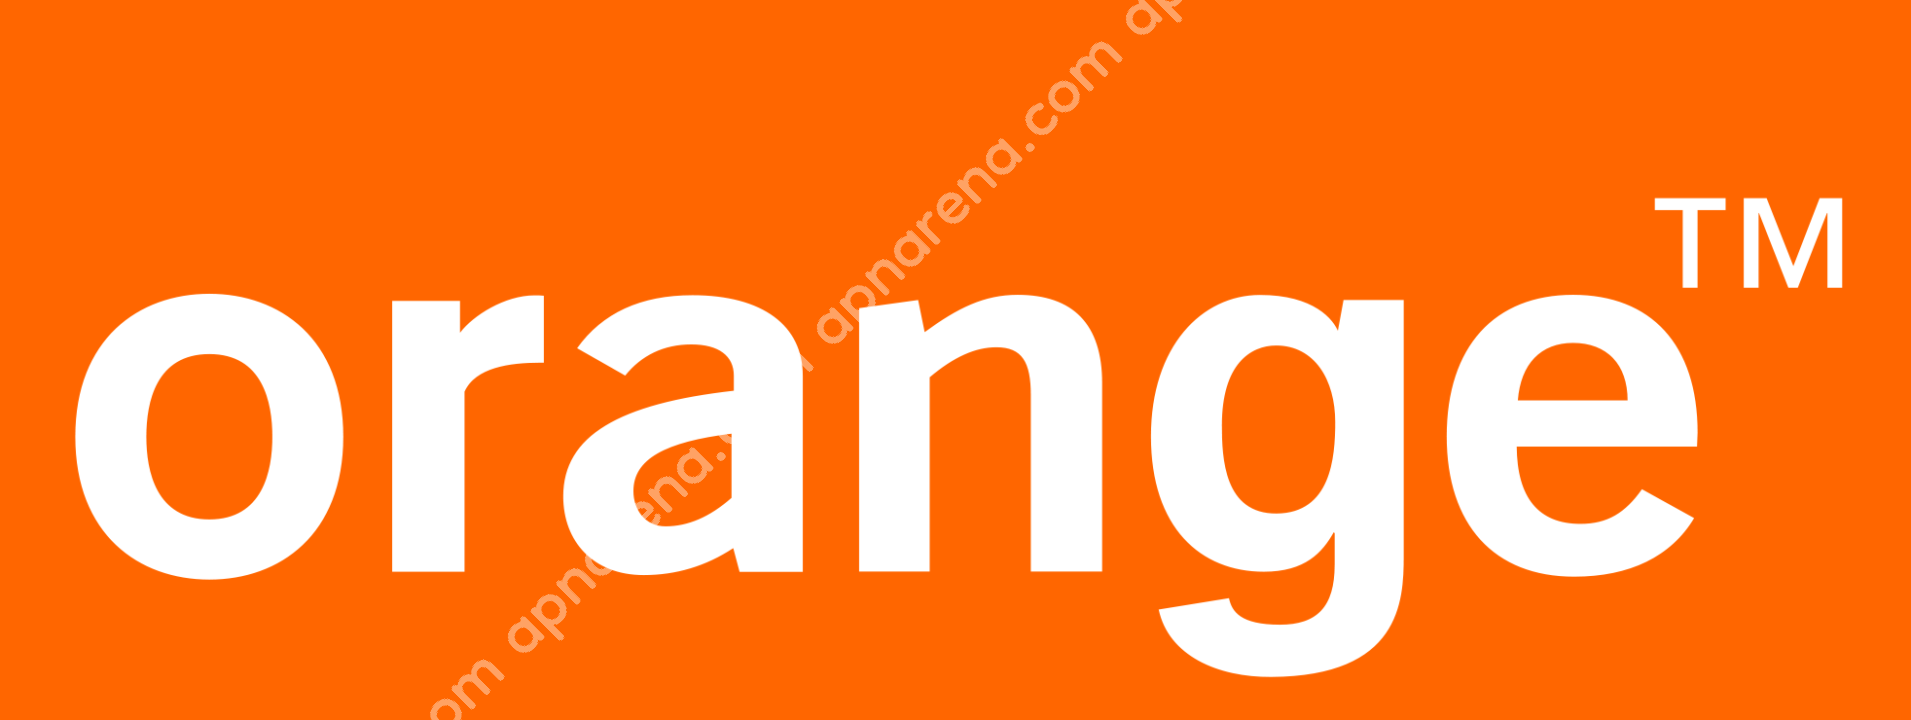 Orange La Réunion APN Internet Settings Android iPhone